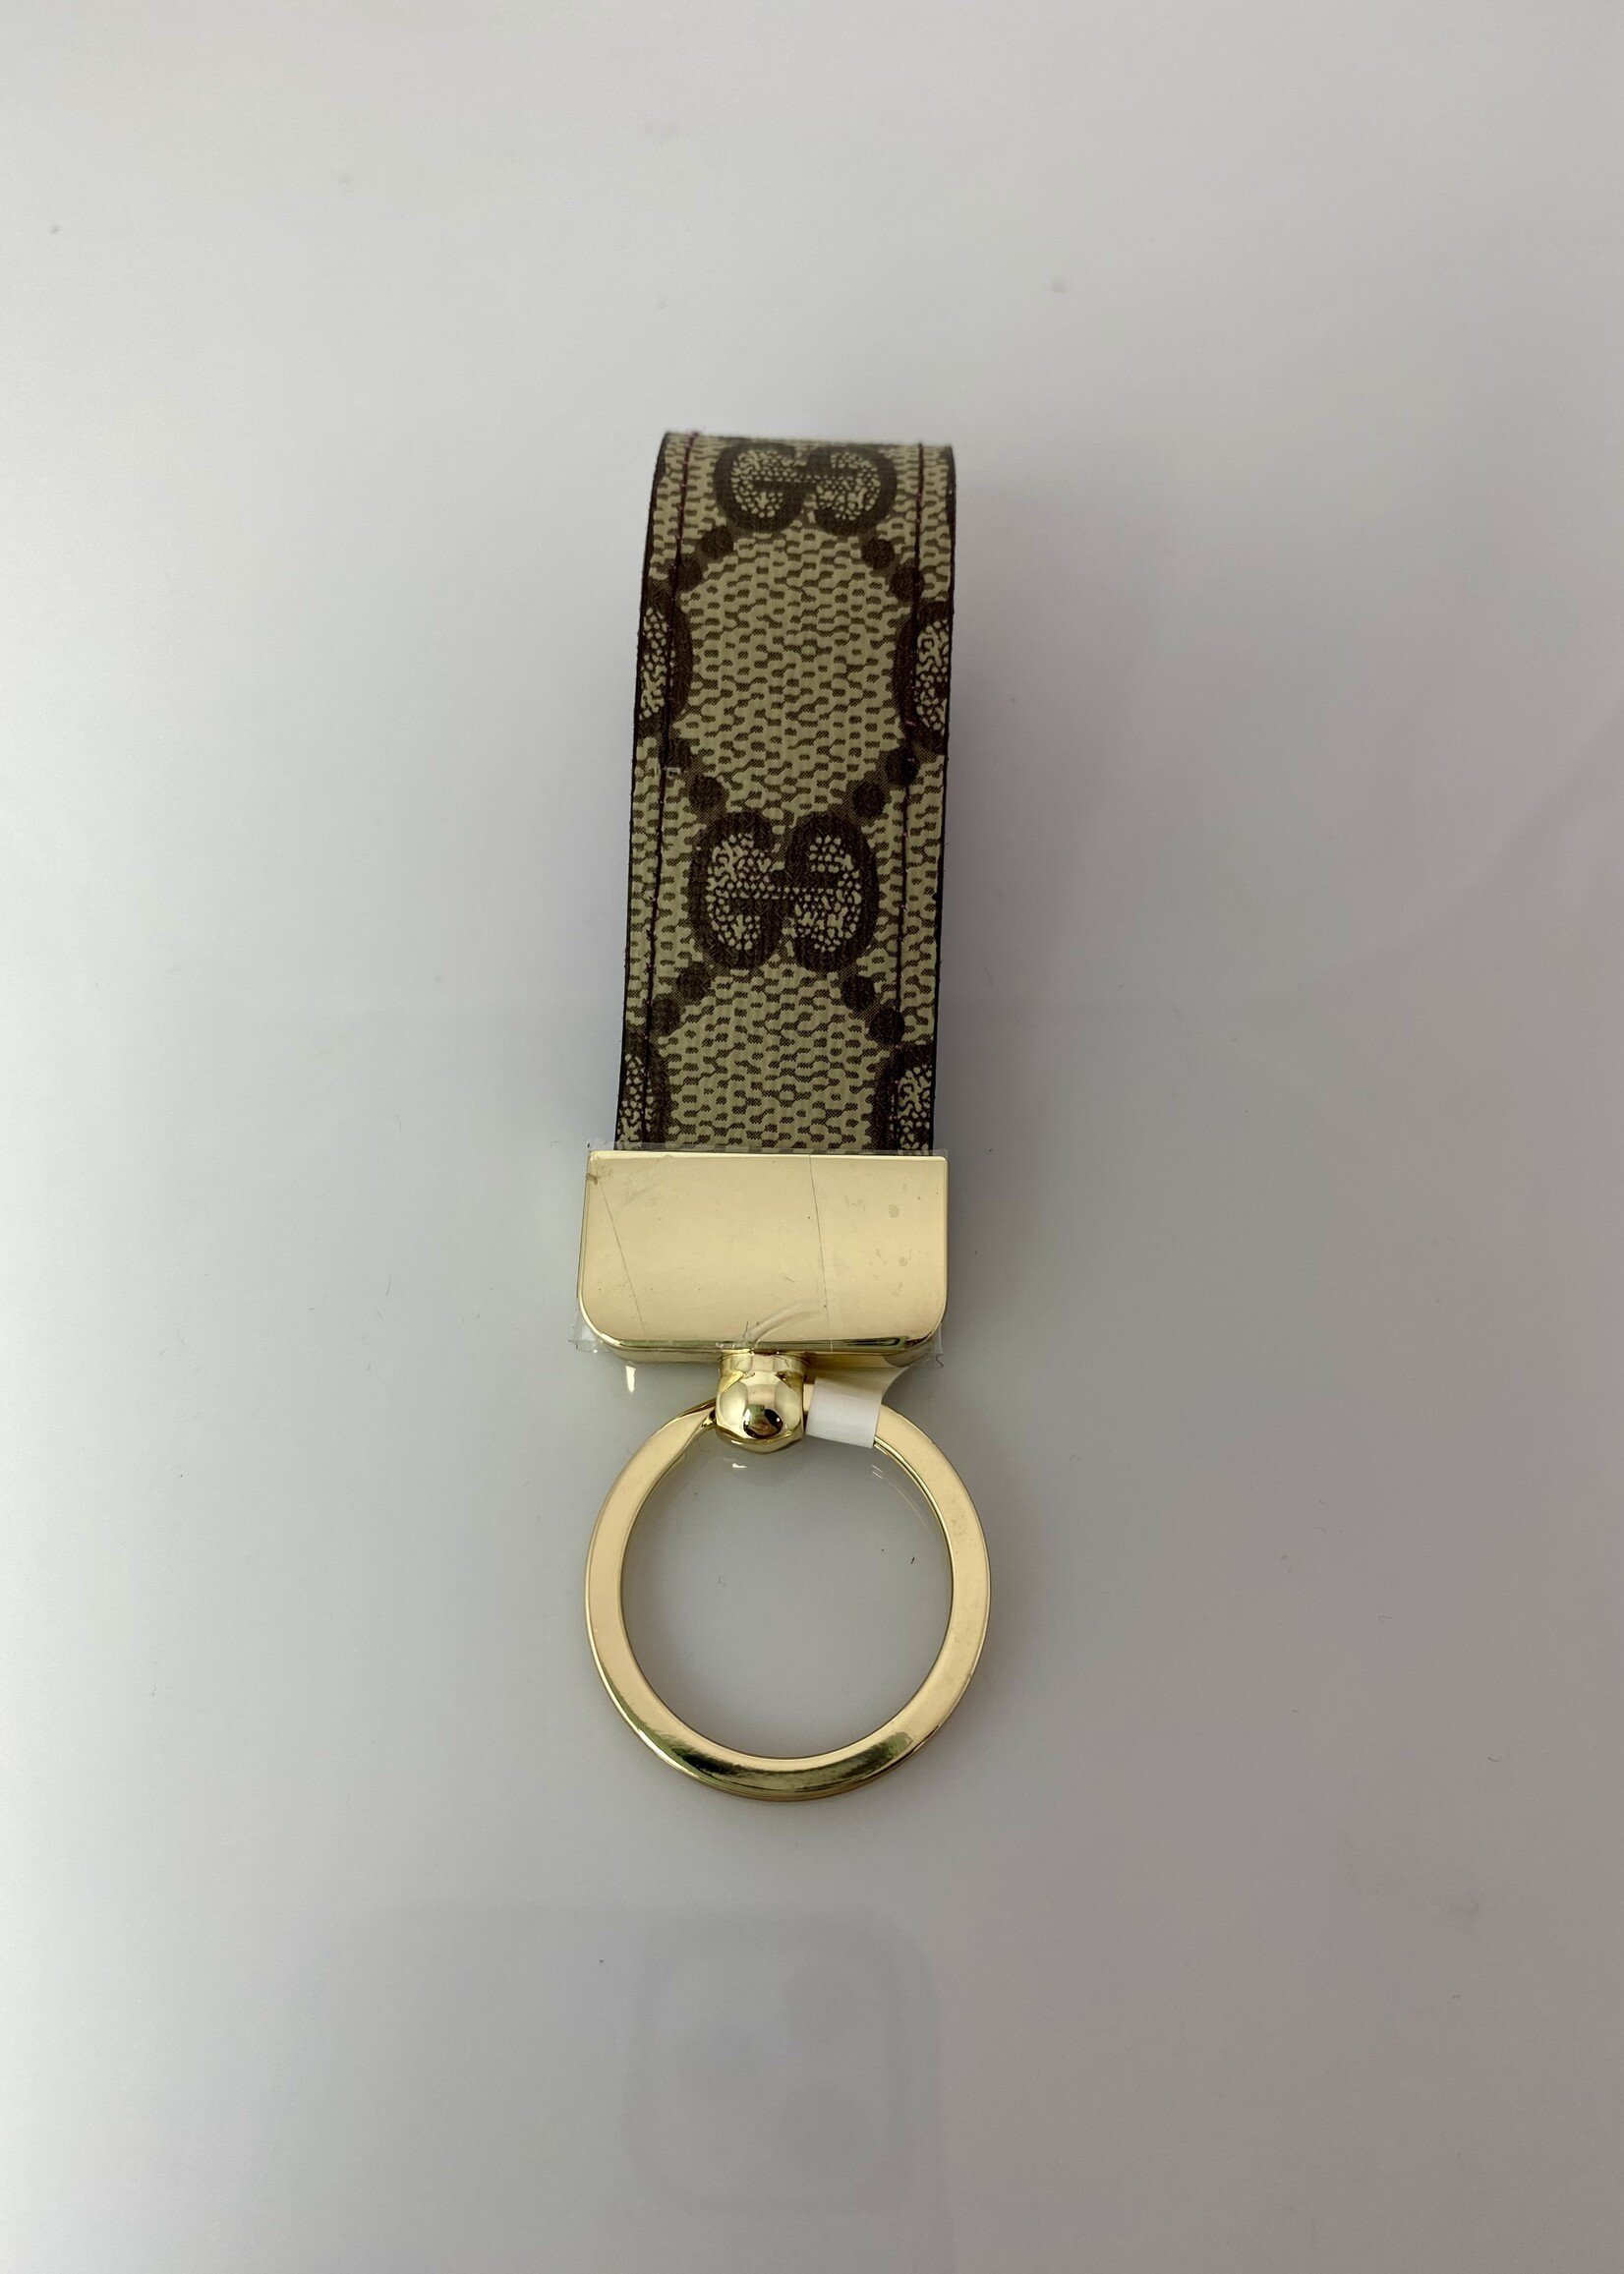 Louis Vuitton Luxury Repurposed Key Fob